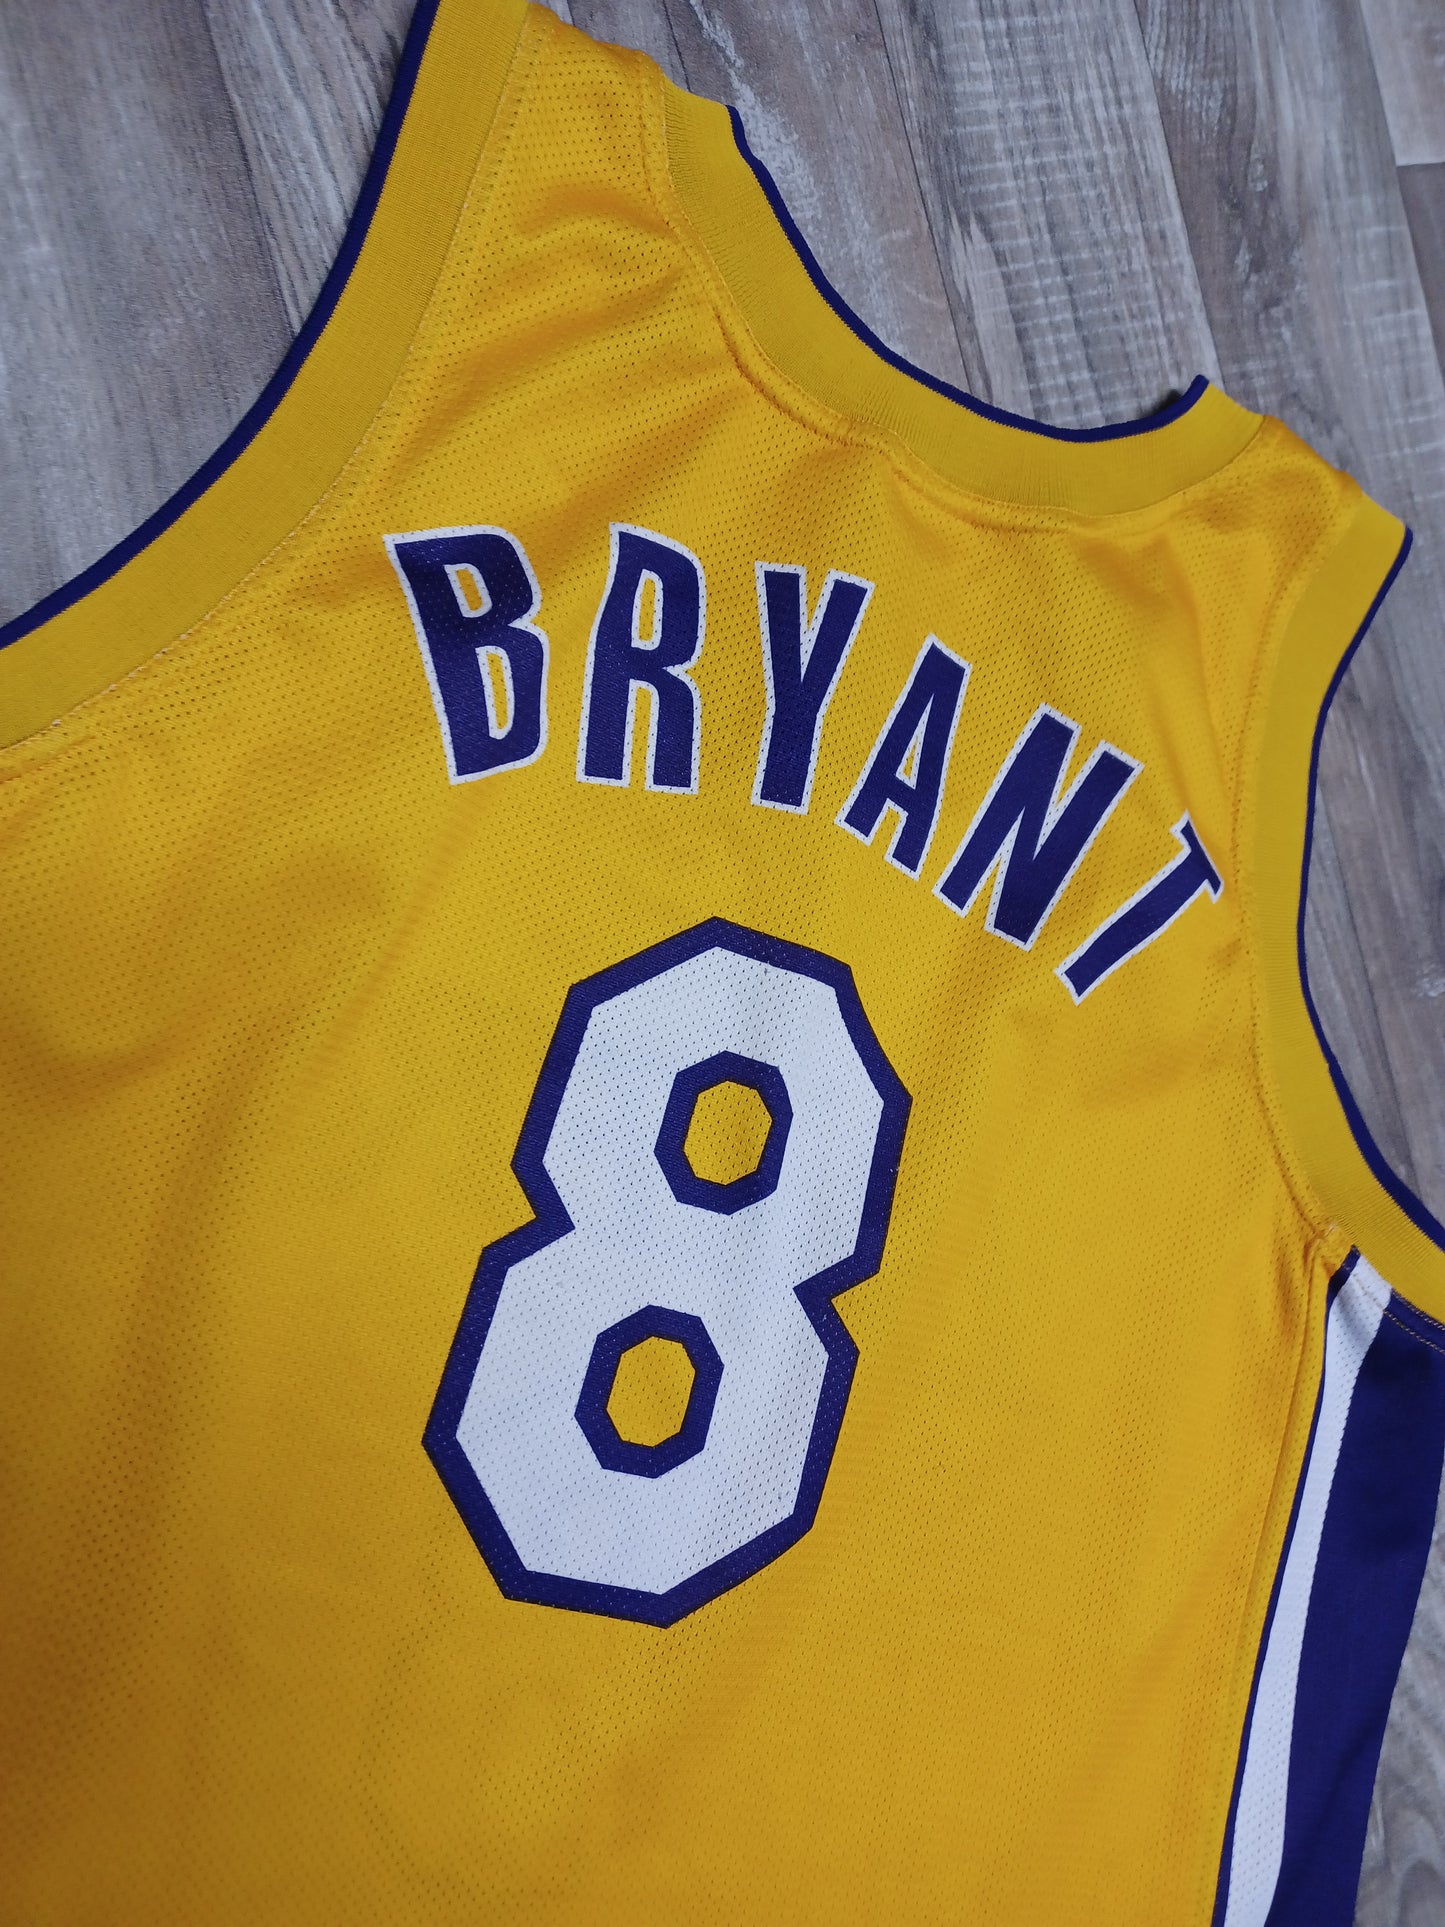 Kobe Bryant Los Angeles Lakers Jersey Size Large